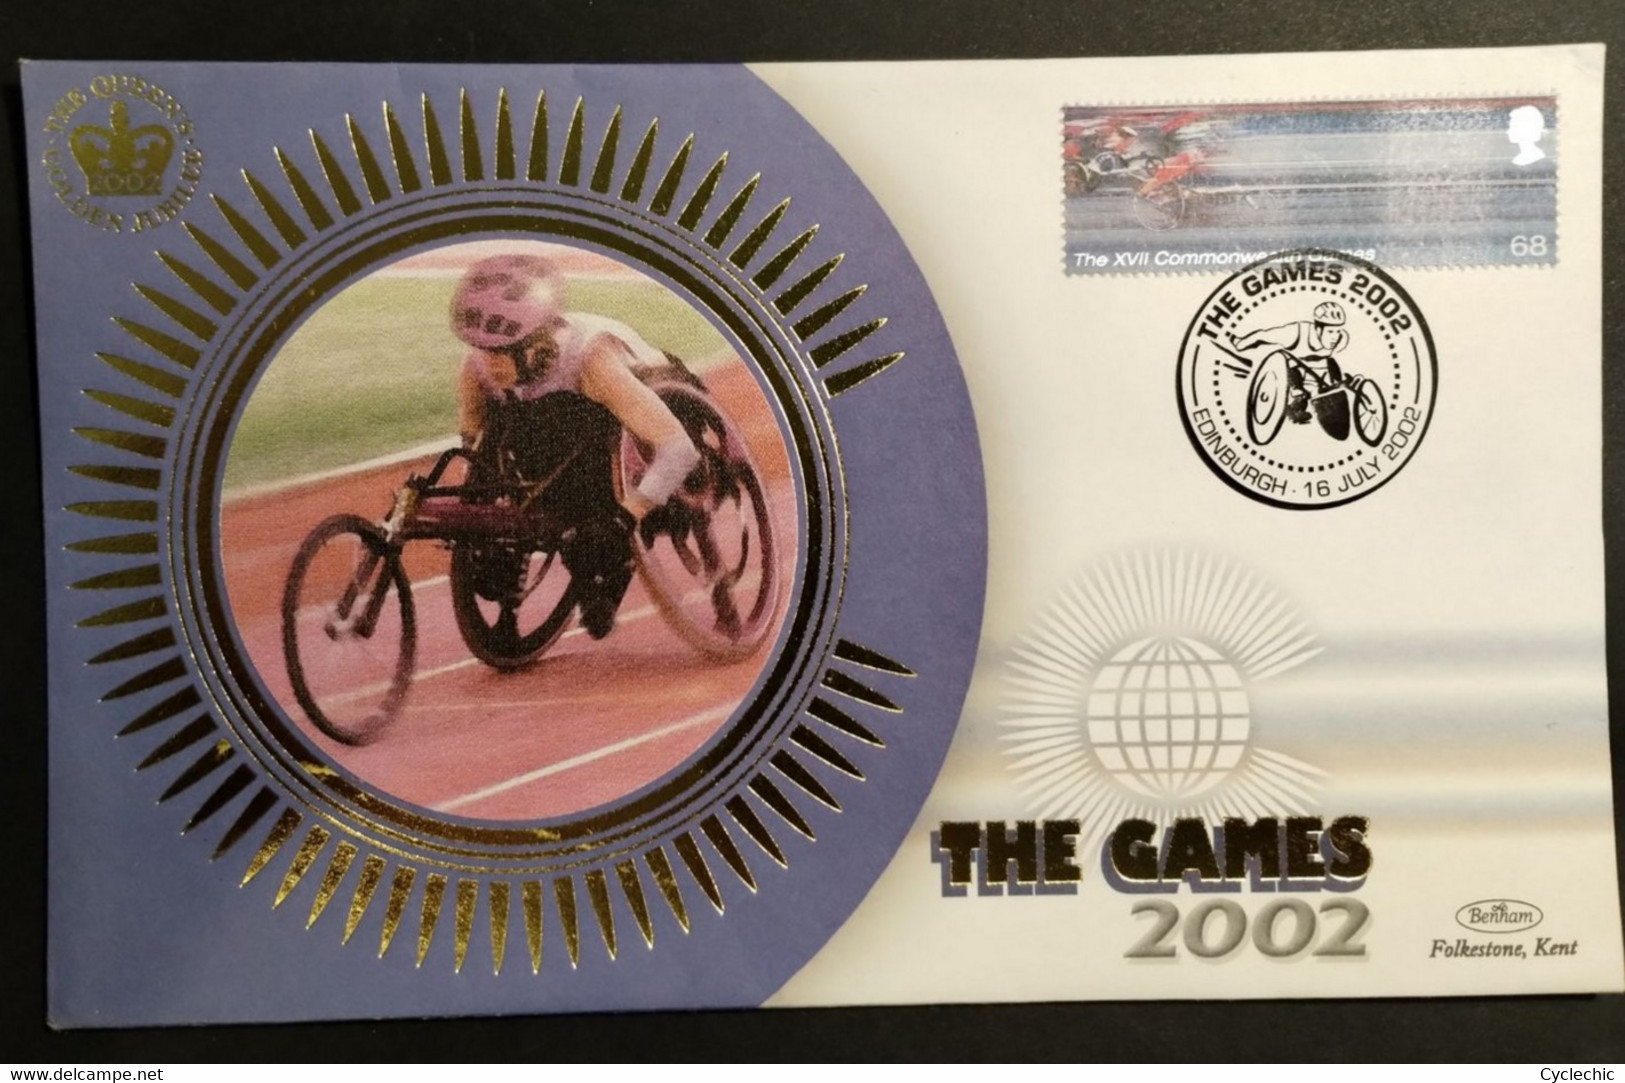 Commonwealth Games Manchester - 2002 Great Britain UK Paralympics Wheelchair - 2001-10 Ediciones Decimales